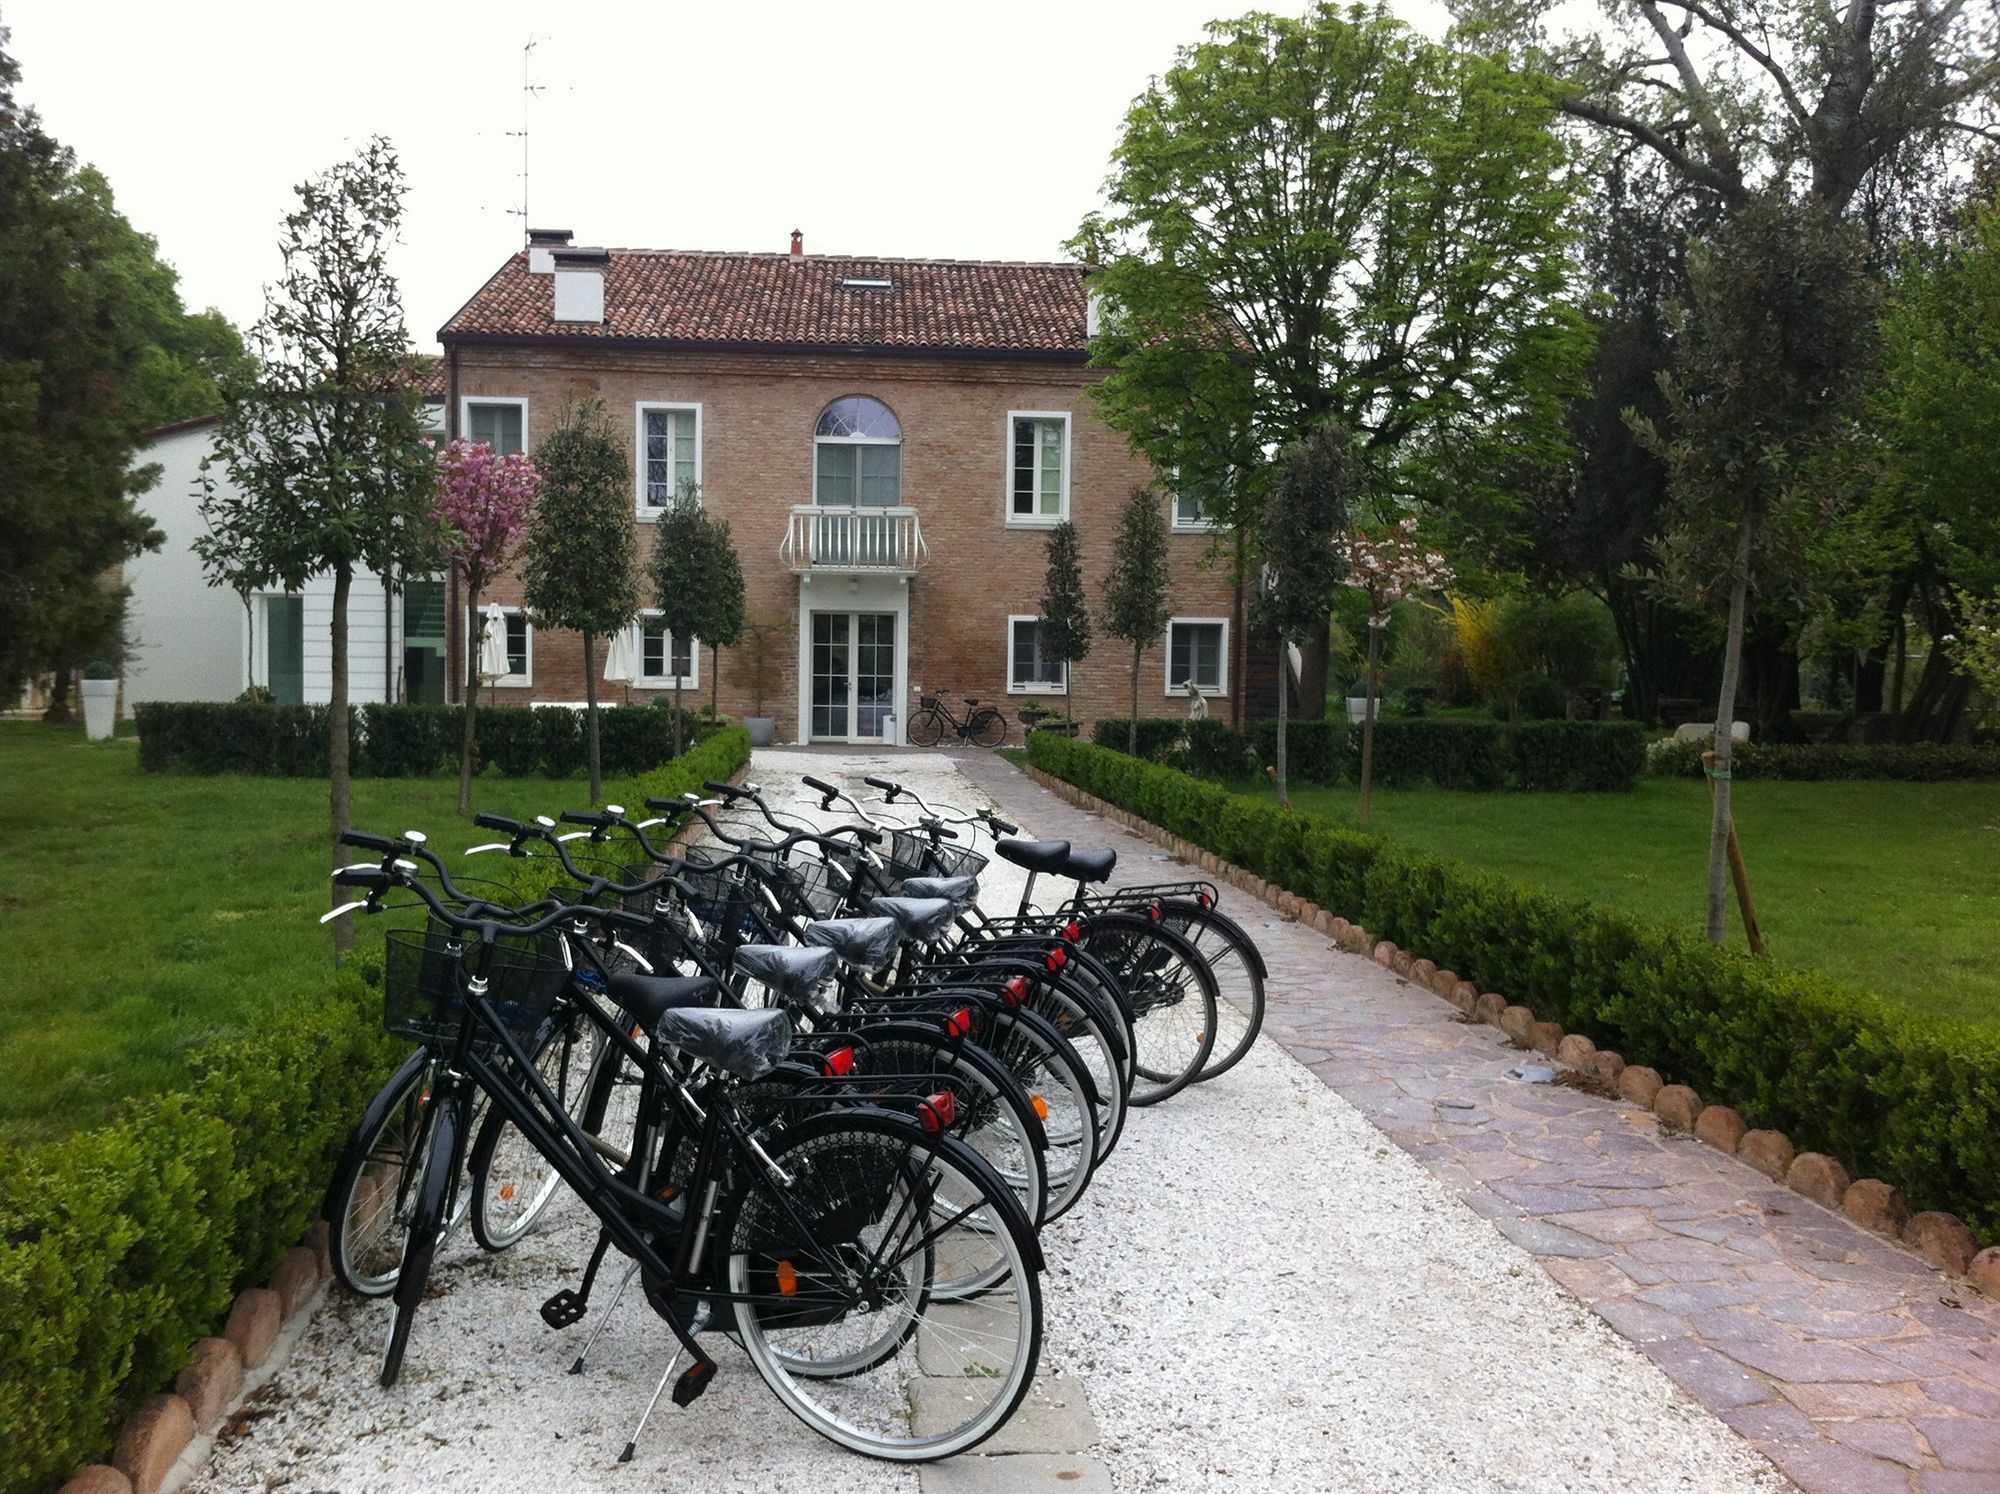 Horti Della Fasanara Konuk evi Ferrara Dış mekan fotoğraf